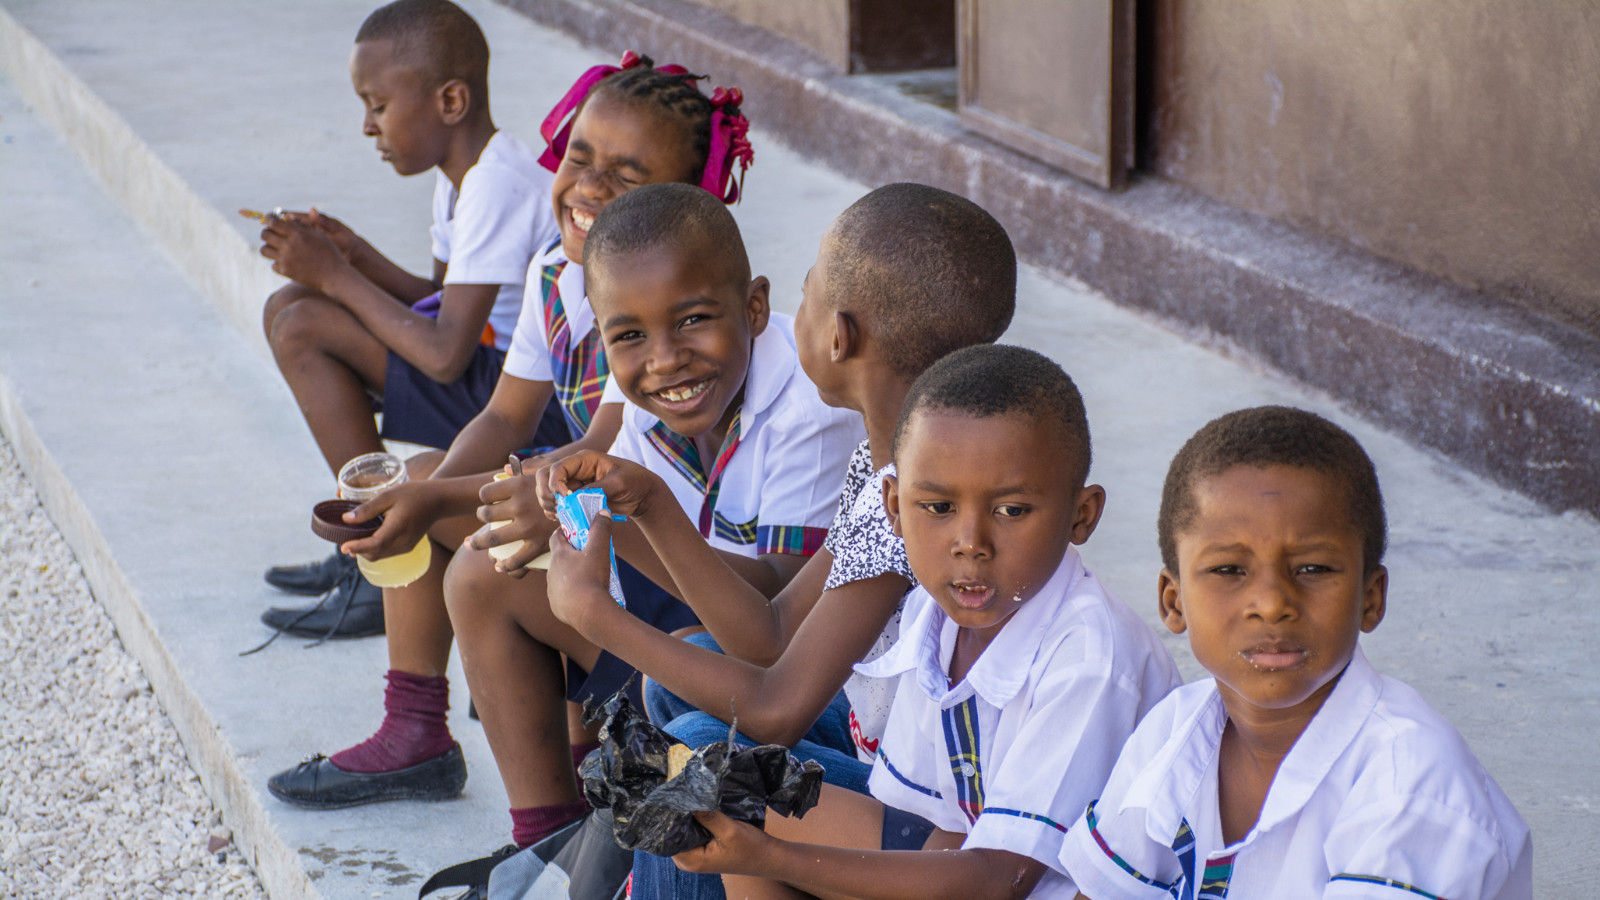 Haitian children in school uniforms eating snacks on curbside